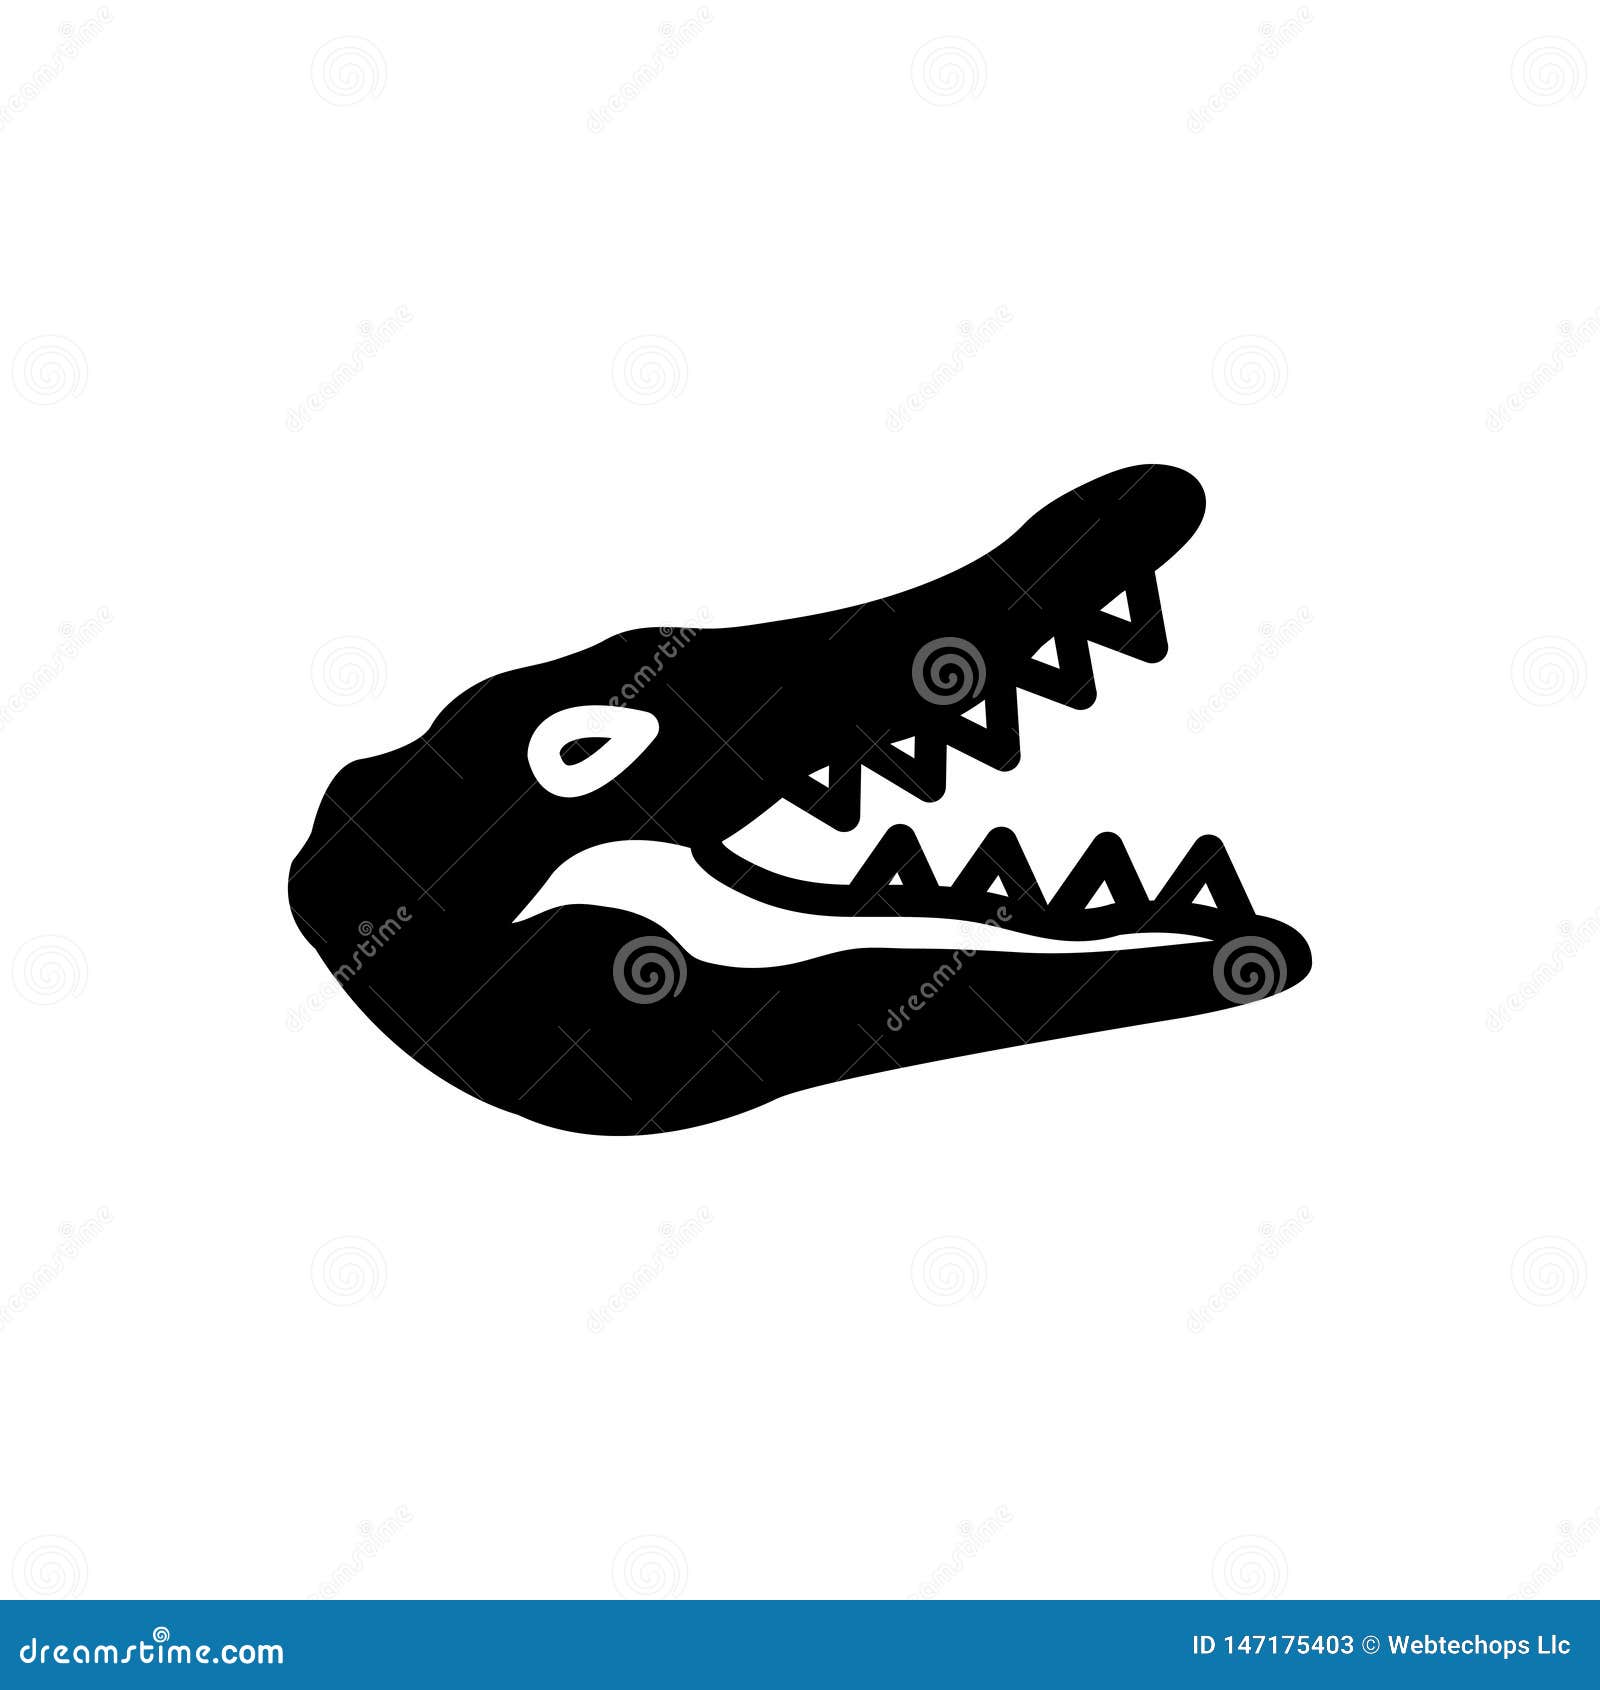 black solid icon for crocodile, alligator and animal